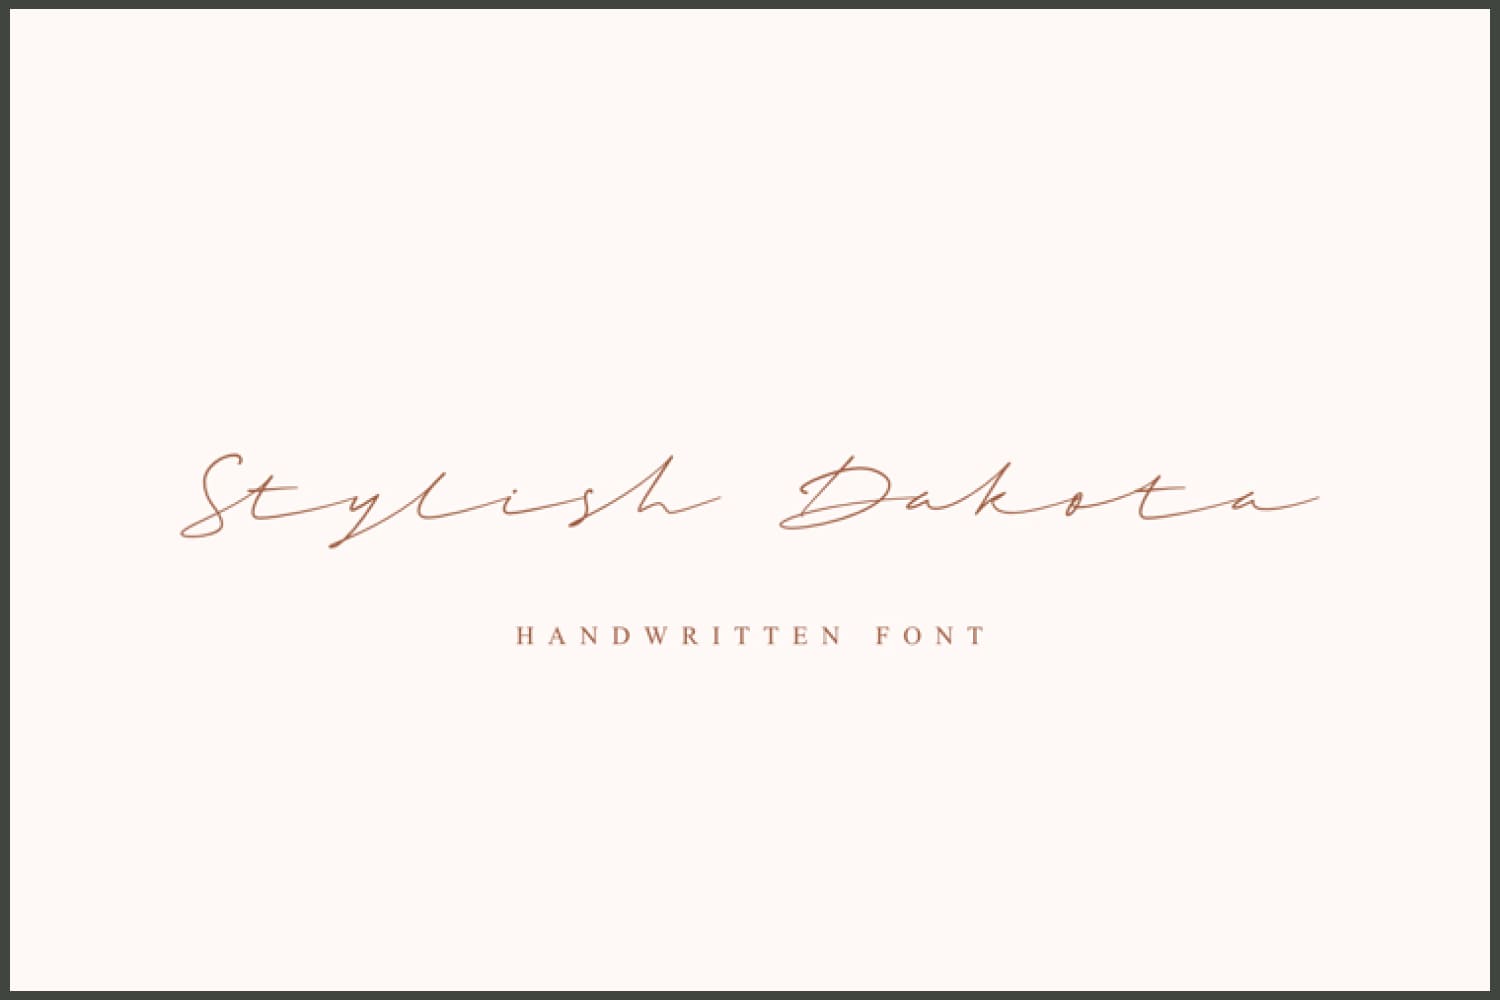 Brown handwritten text Stylish Dakota on a light background.